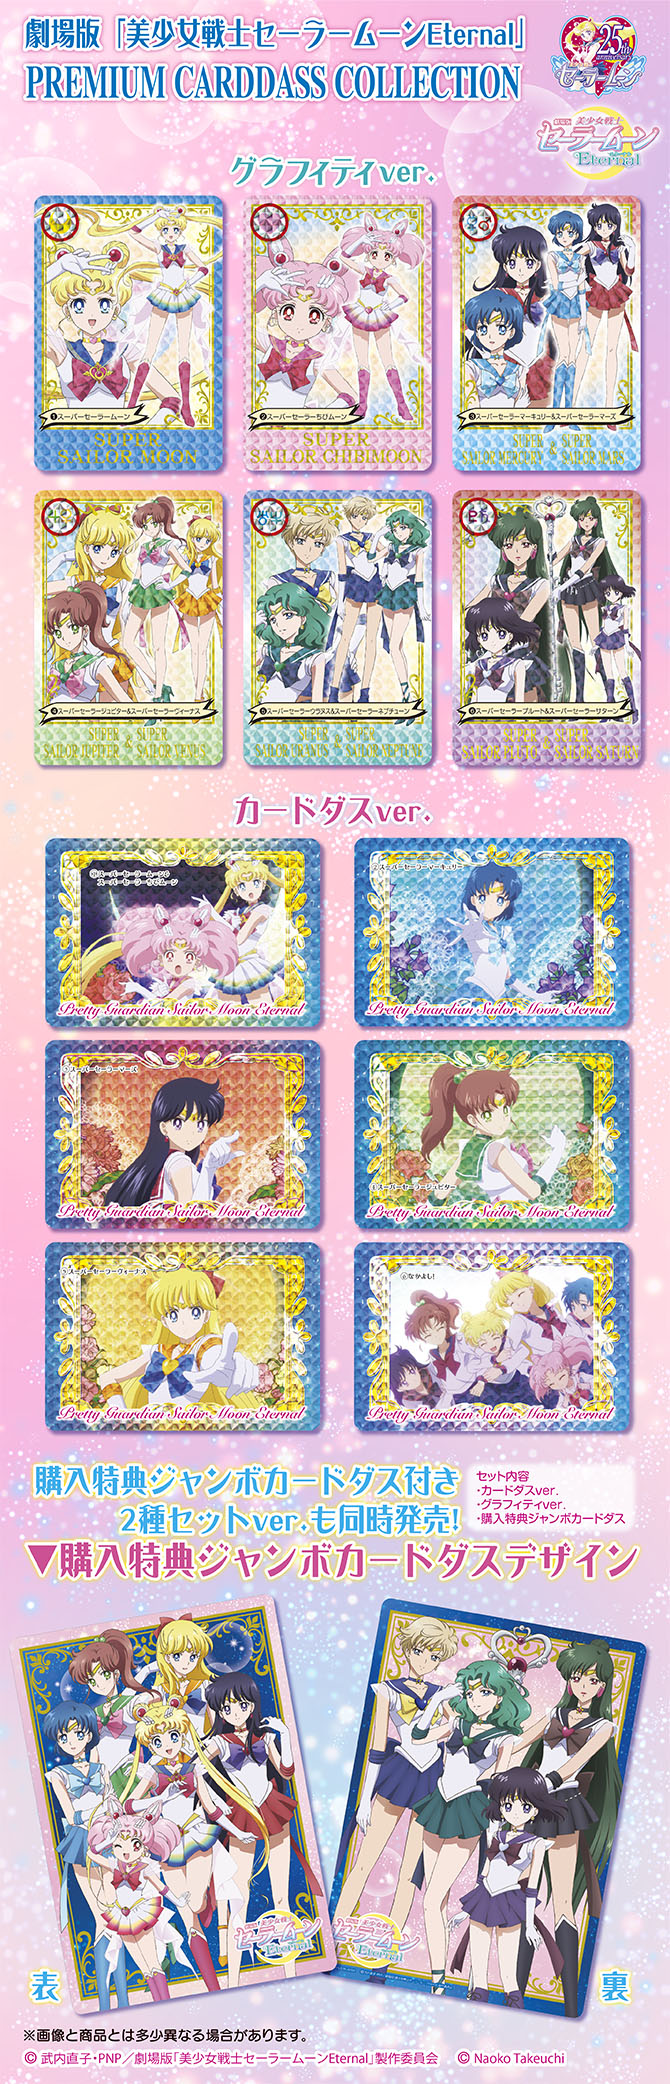 Sailor Moon Eternal Premium Carddass Collection 20101410